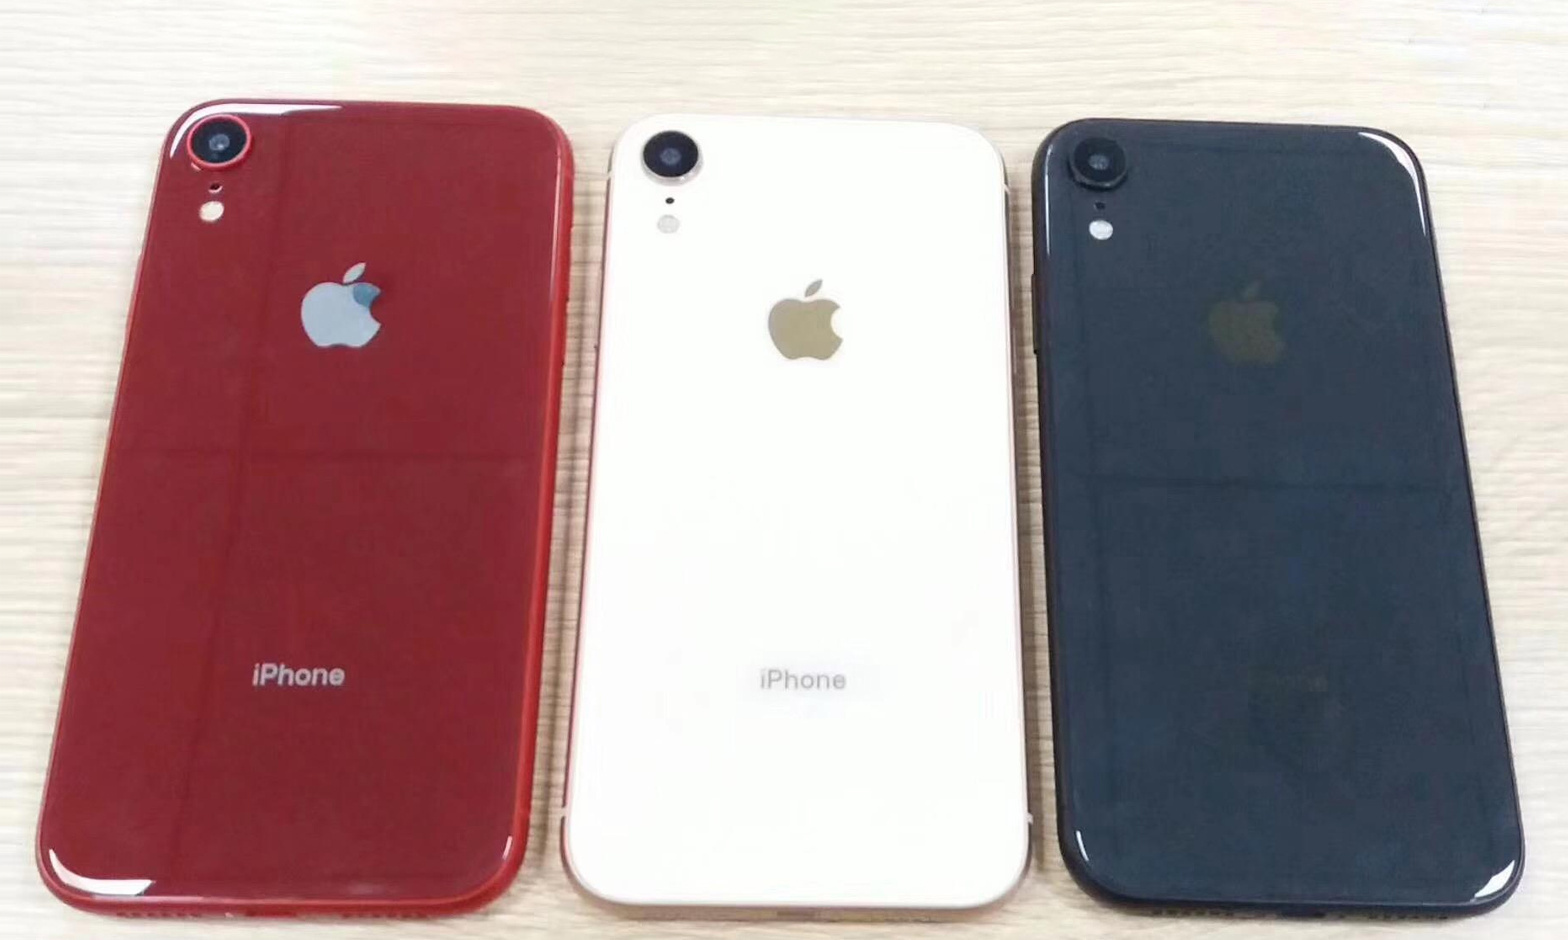 官网入手磨砂黑 Apple iPhone 7 Plus 及Silicone Case体验_iPhone_什么值得买